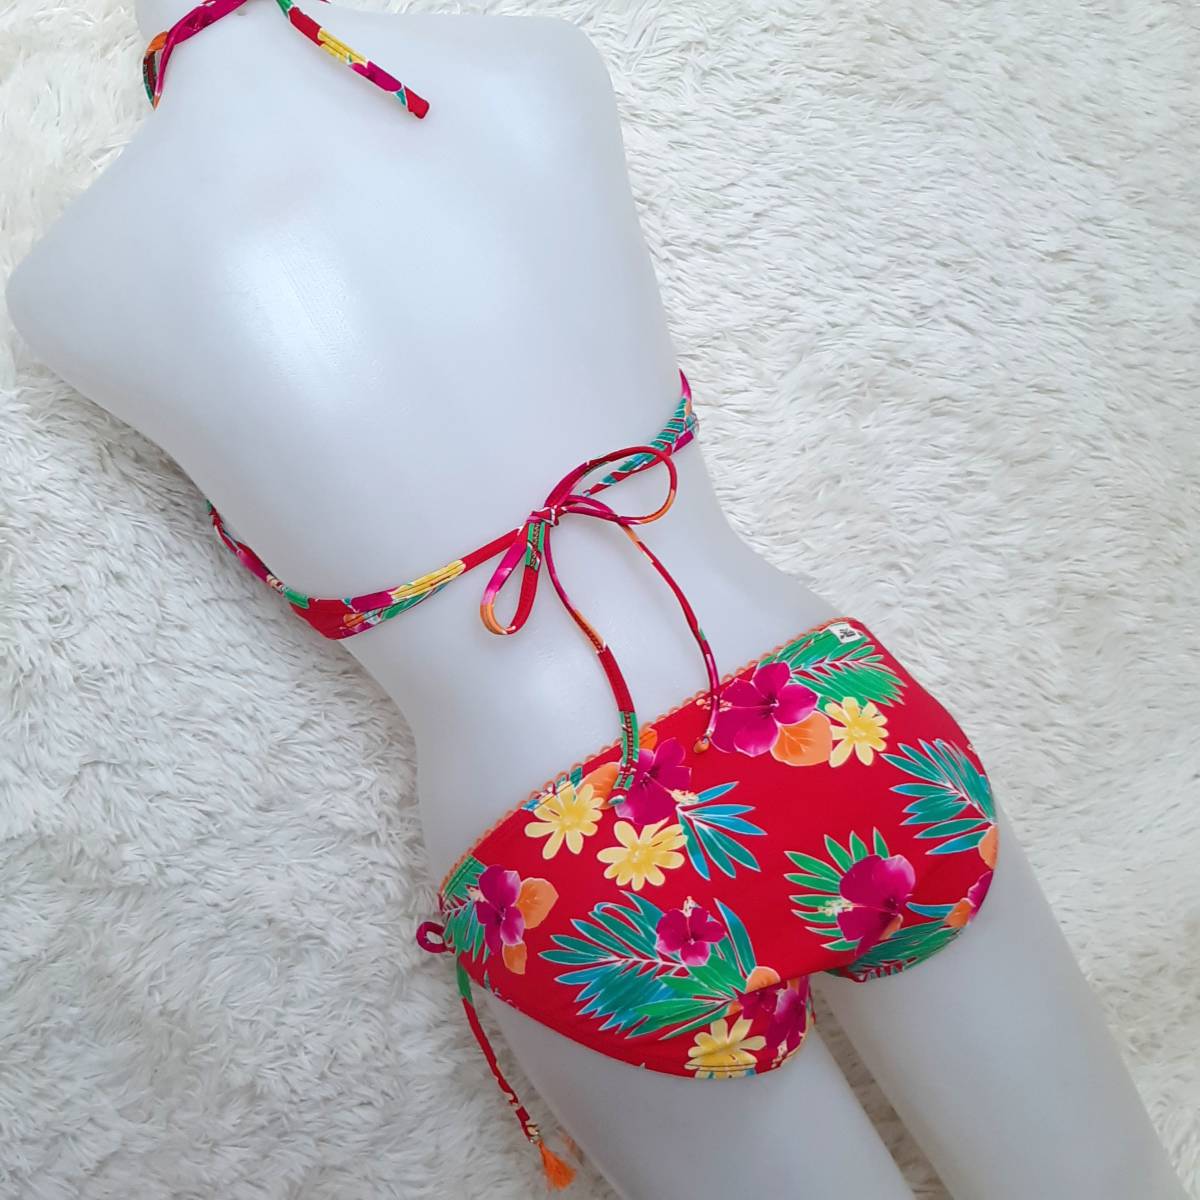  anonymity delivery *Hobie floral print lemon pad wire ... bikini cord bread swimsuit pink L corresponding USA M R